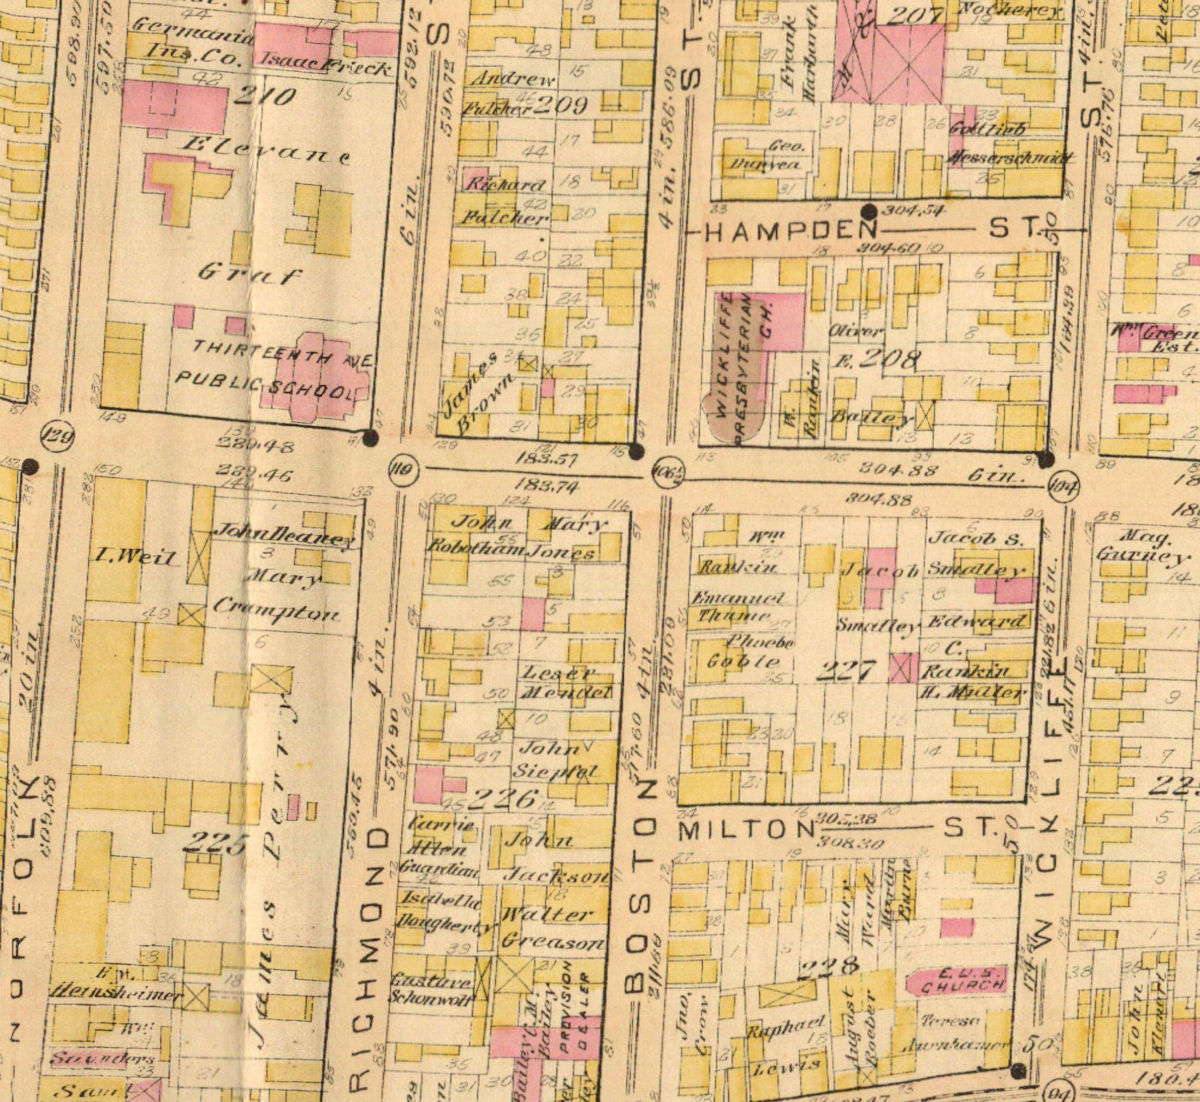 1889 Map
48 Boston Street
